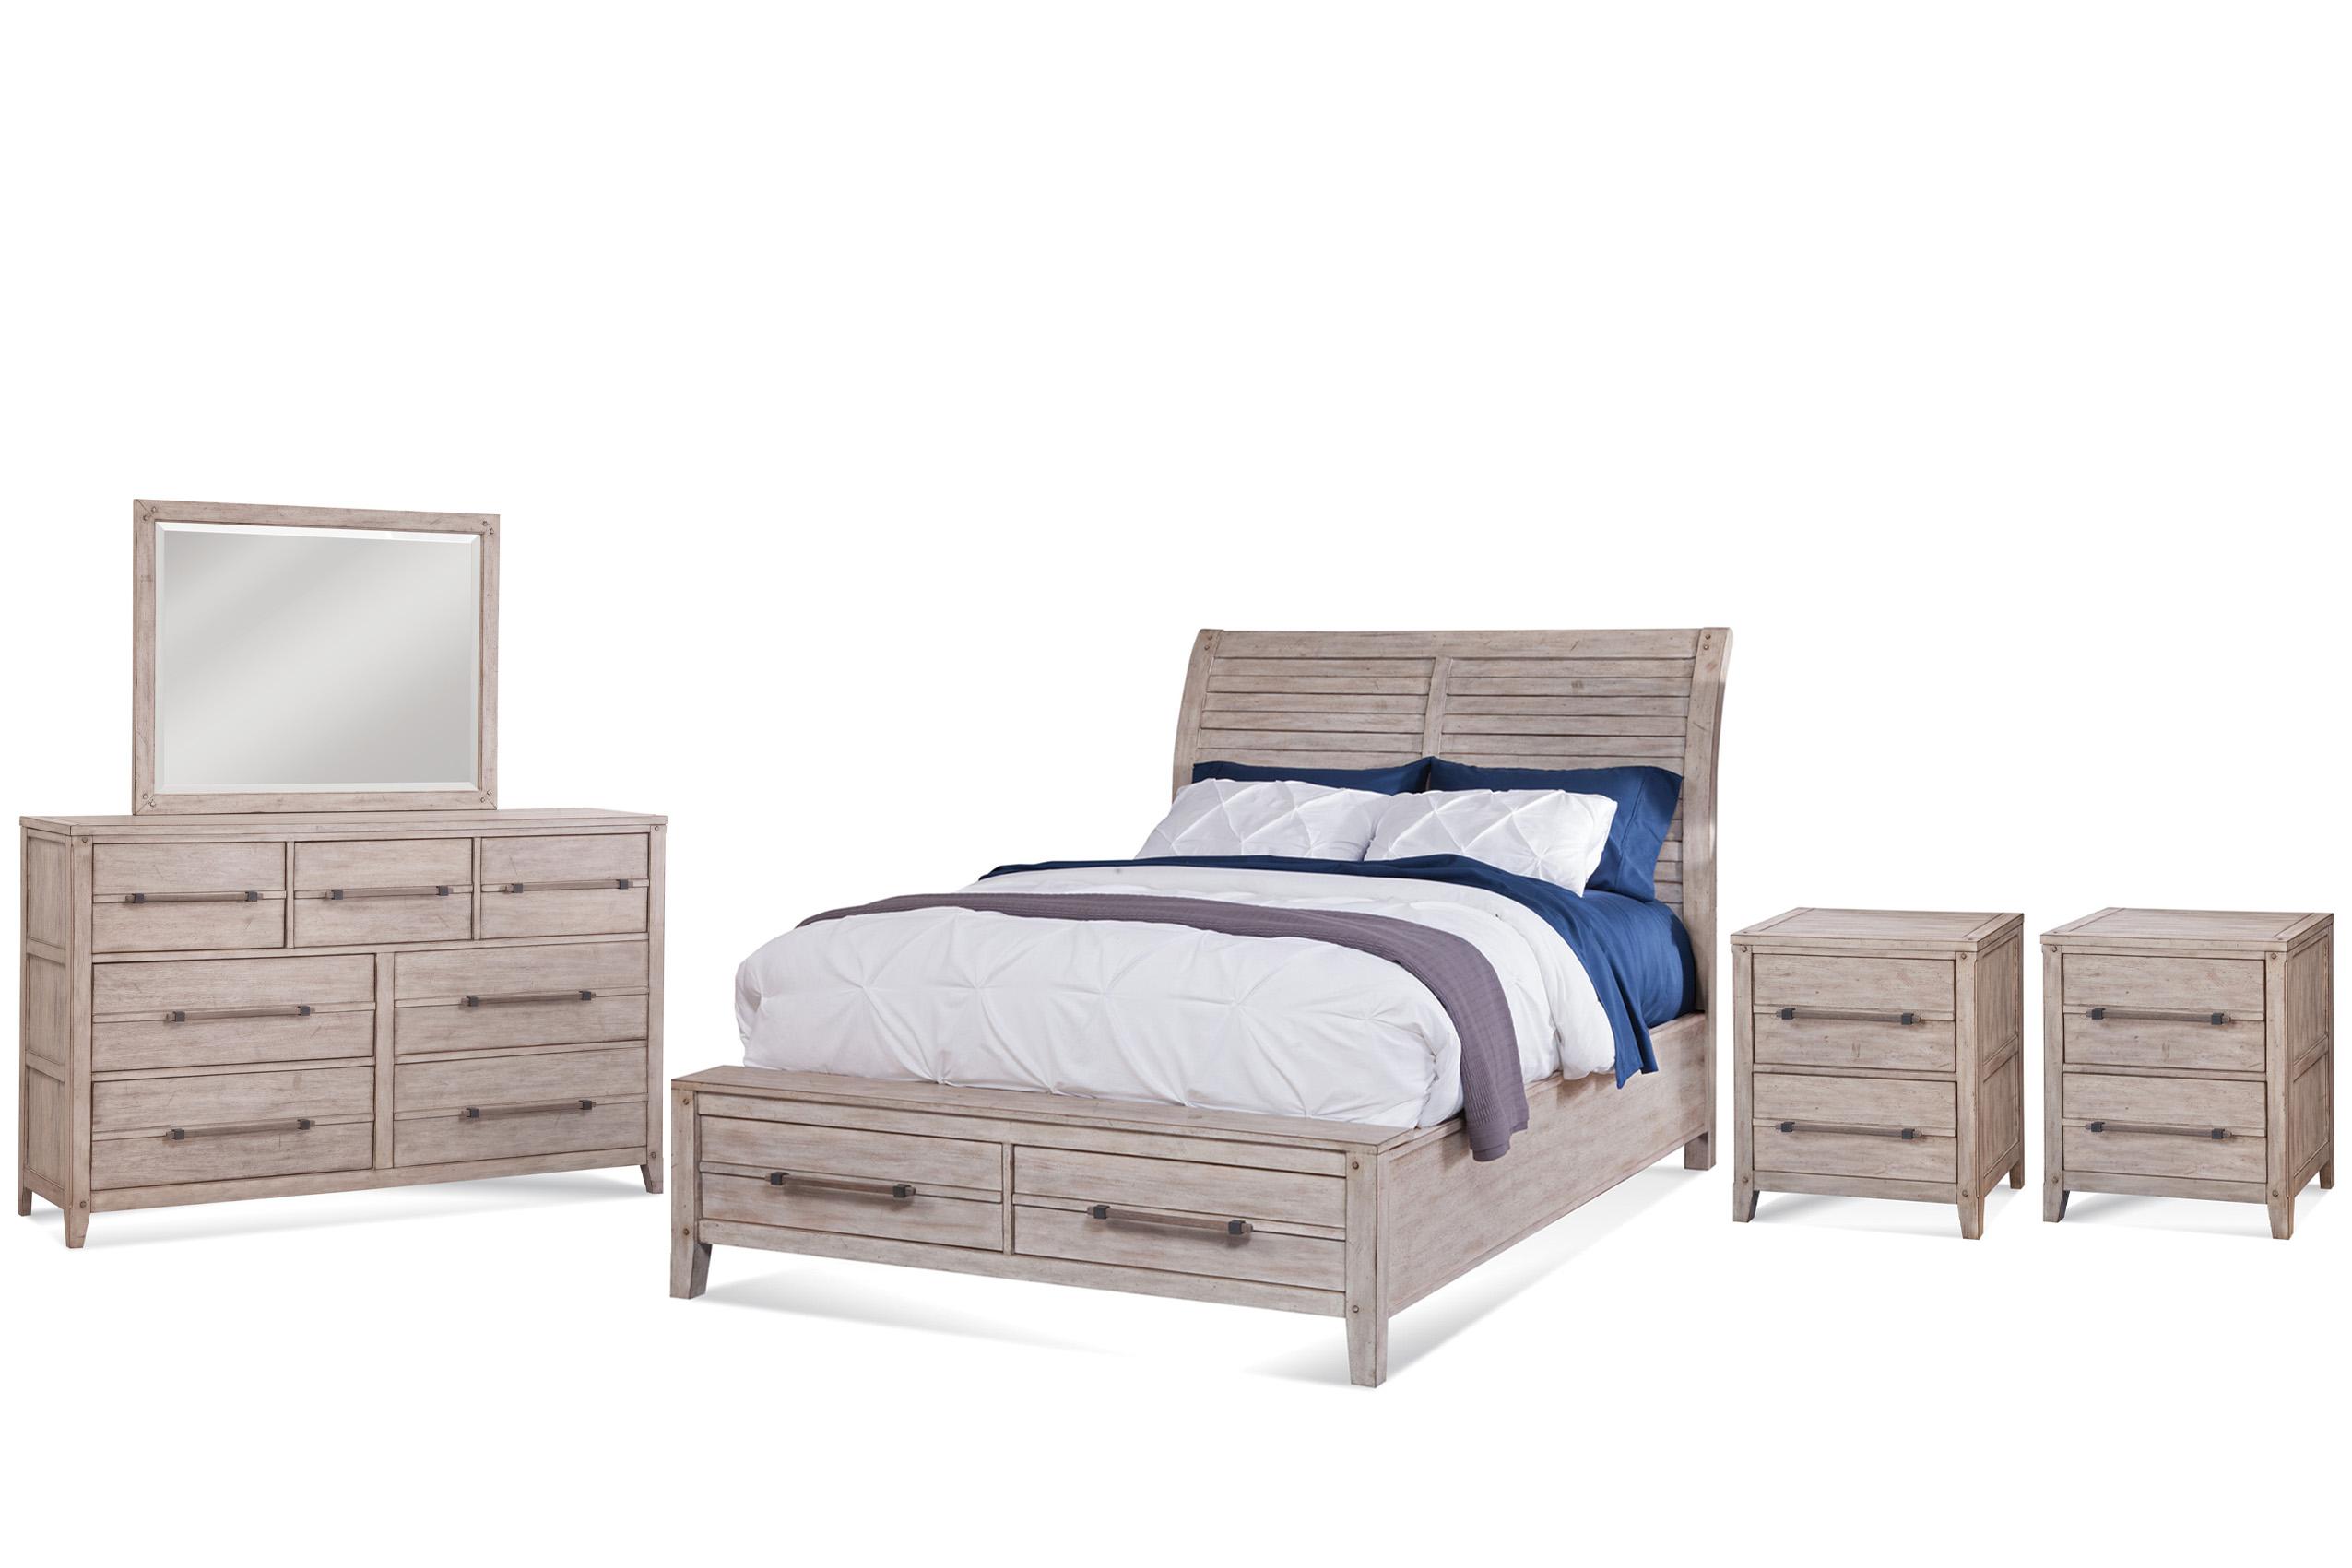 Classic, Traditional Sleigh Bedroom Set AURORA 2810-66PSB 2810-66PSB-2810-420-2NDM-5PC in whitewash 